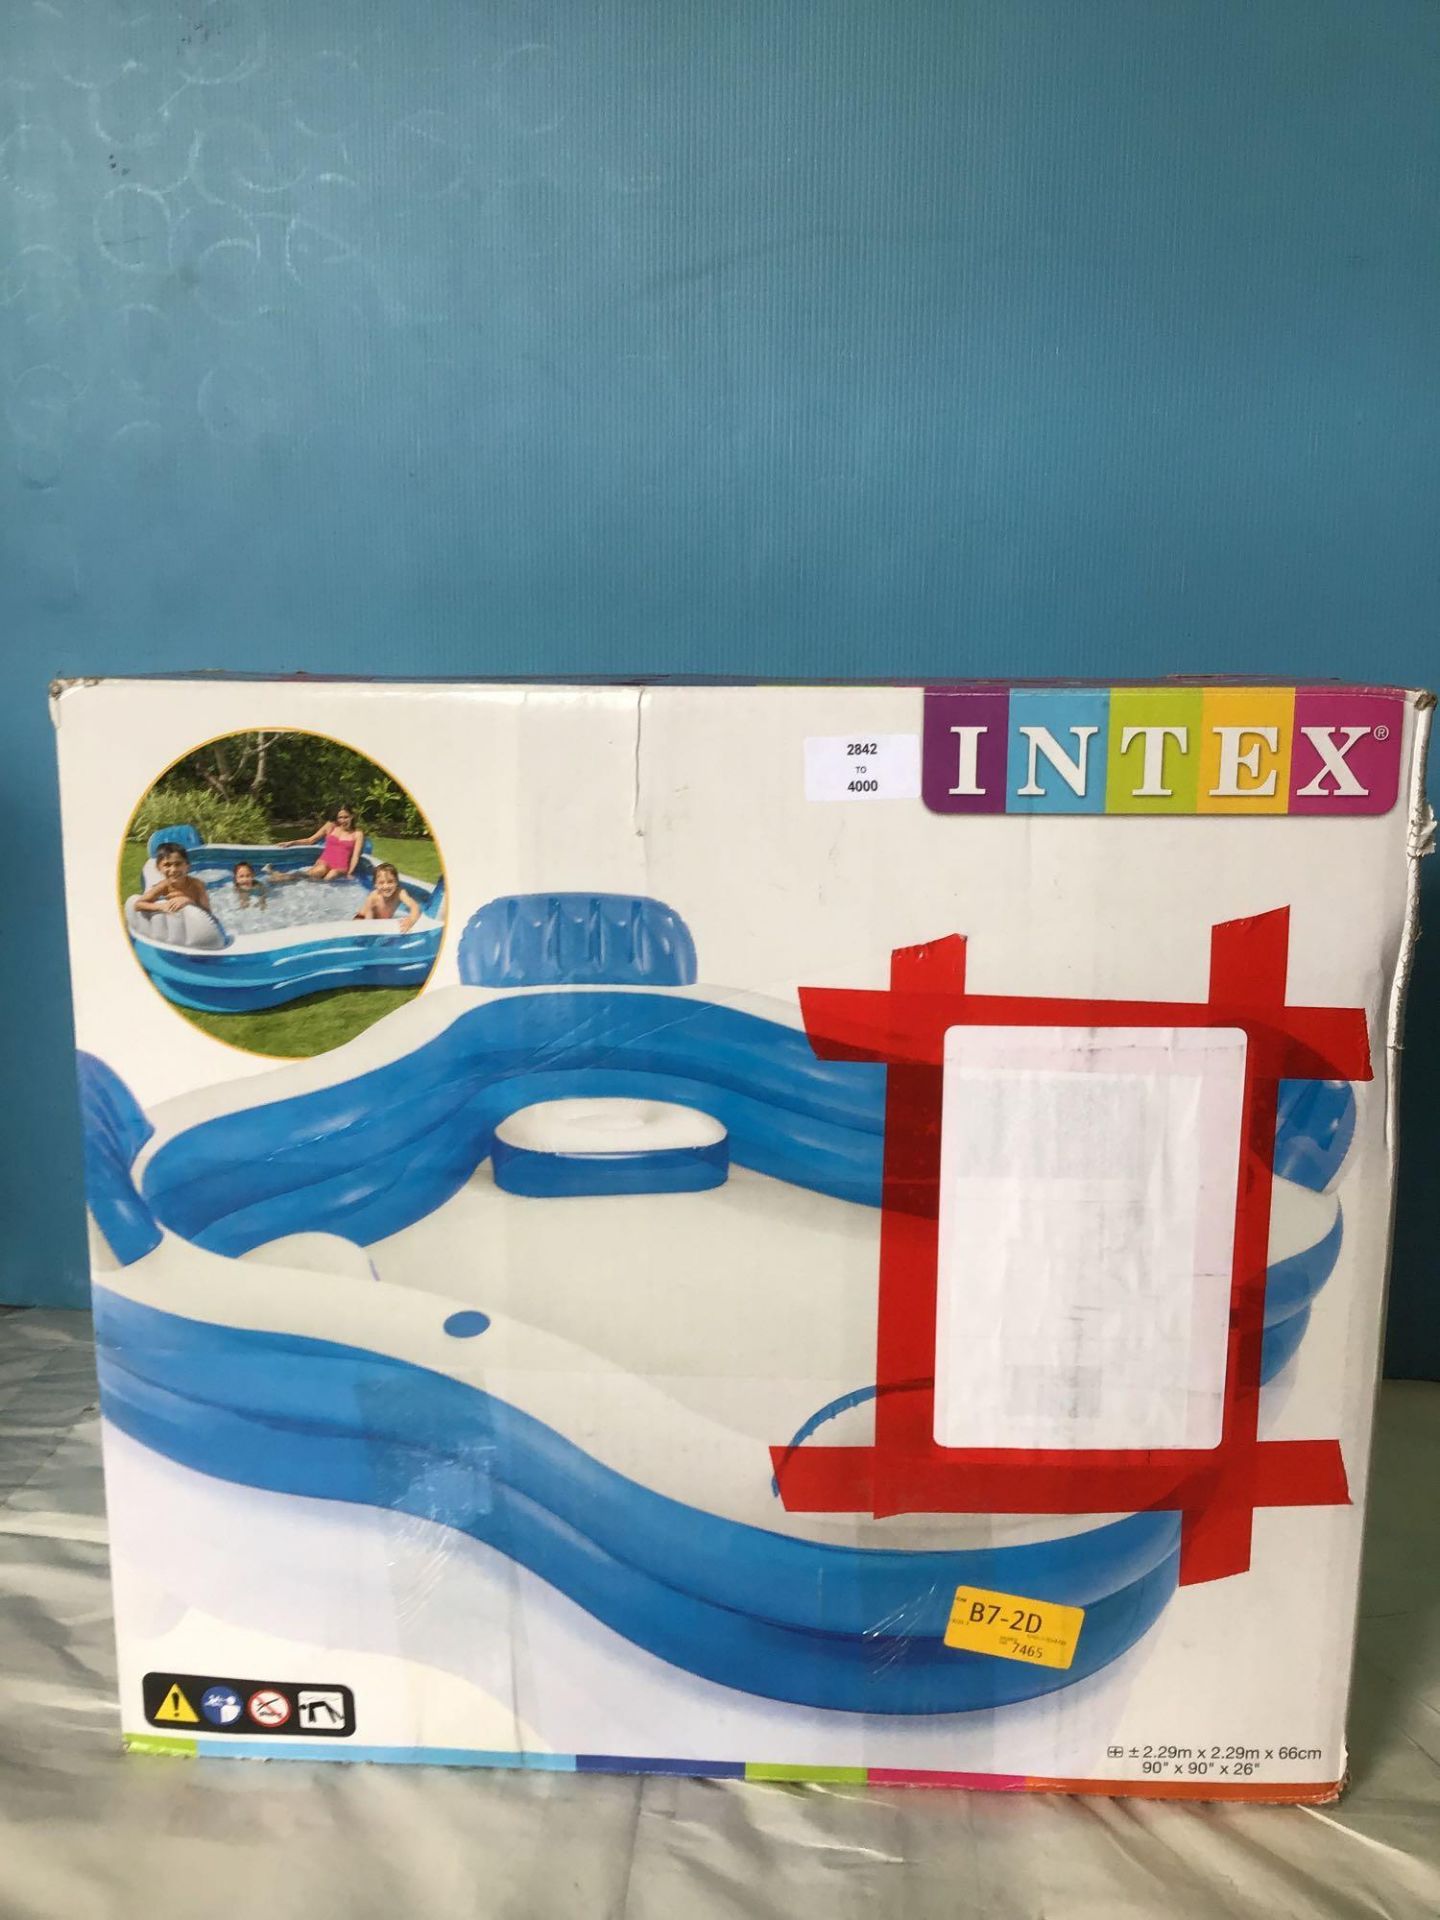 Intex Swim Center Family Lounge Inflatable Pool, 90" X 90" X 26" - Image 2 of 5